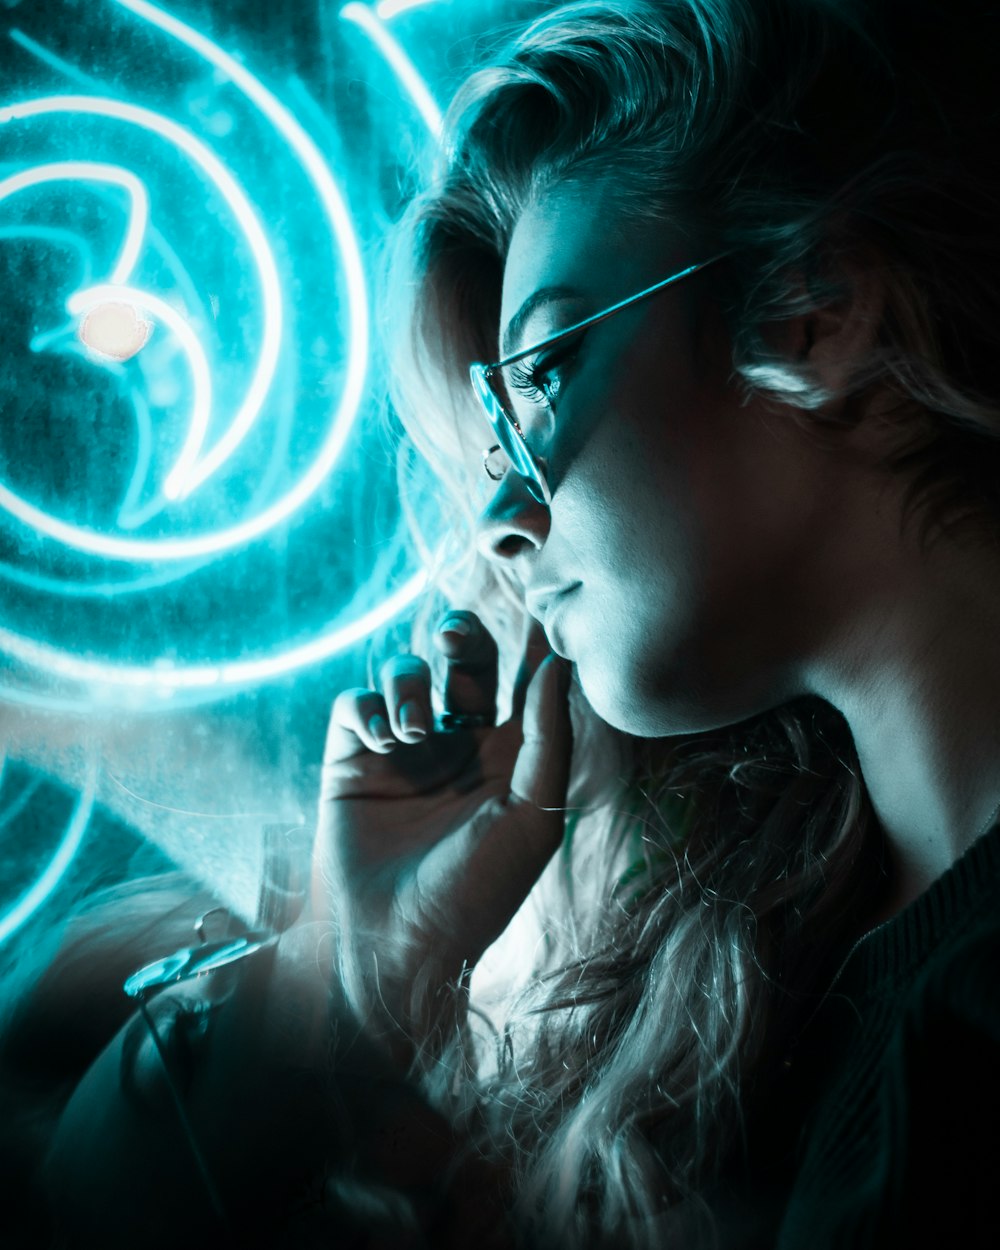 woman wearing sunglasses near blue neon lights